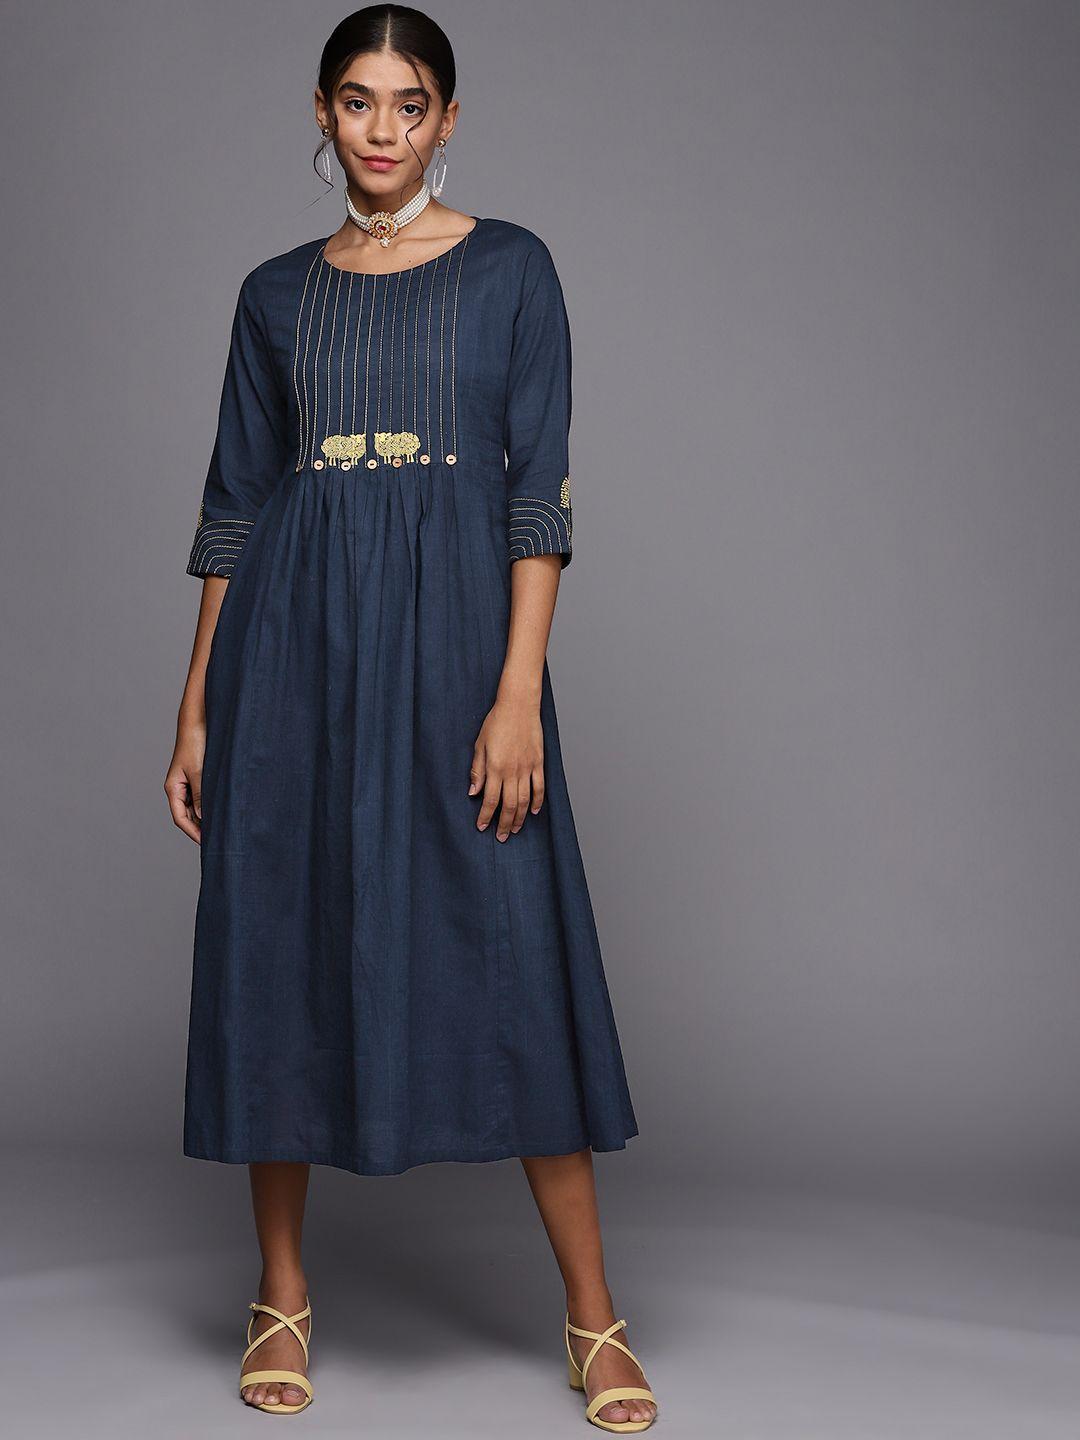 pinksky-navy-blue-tribal-embroidered-a-line-midi-dress